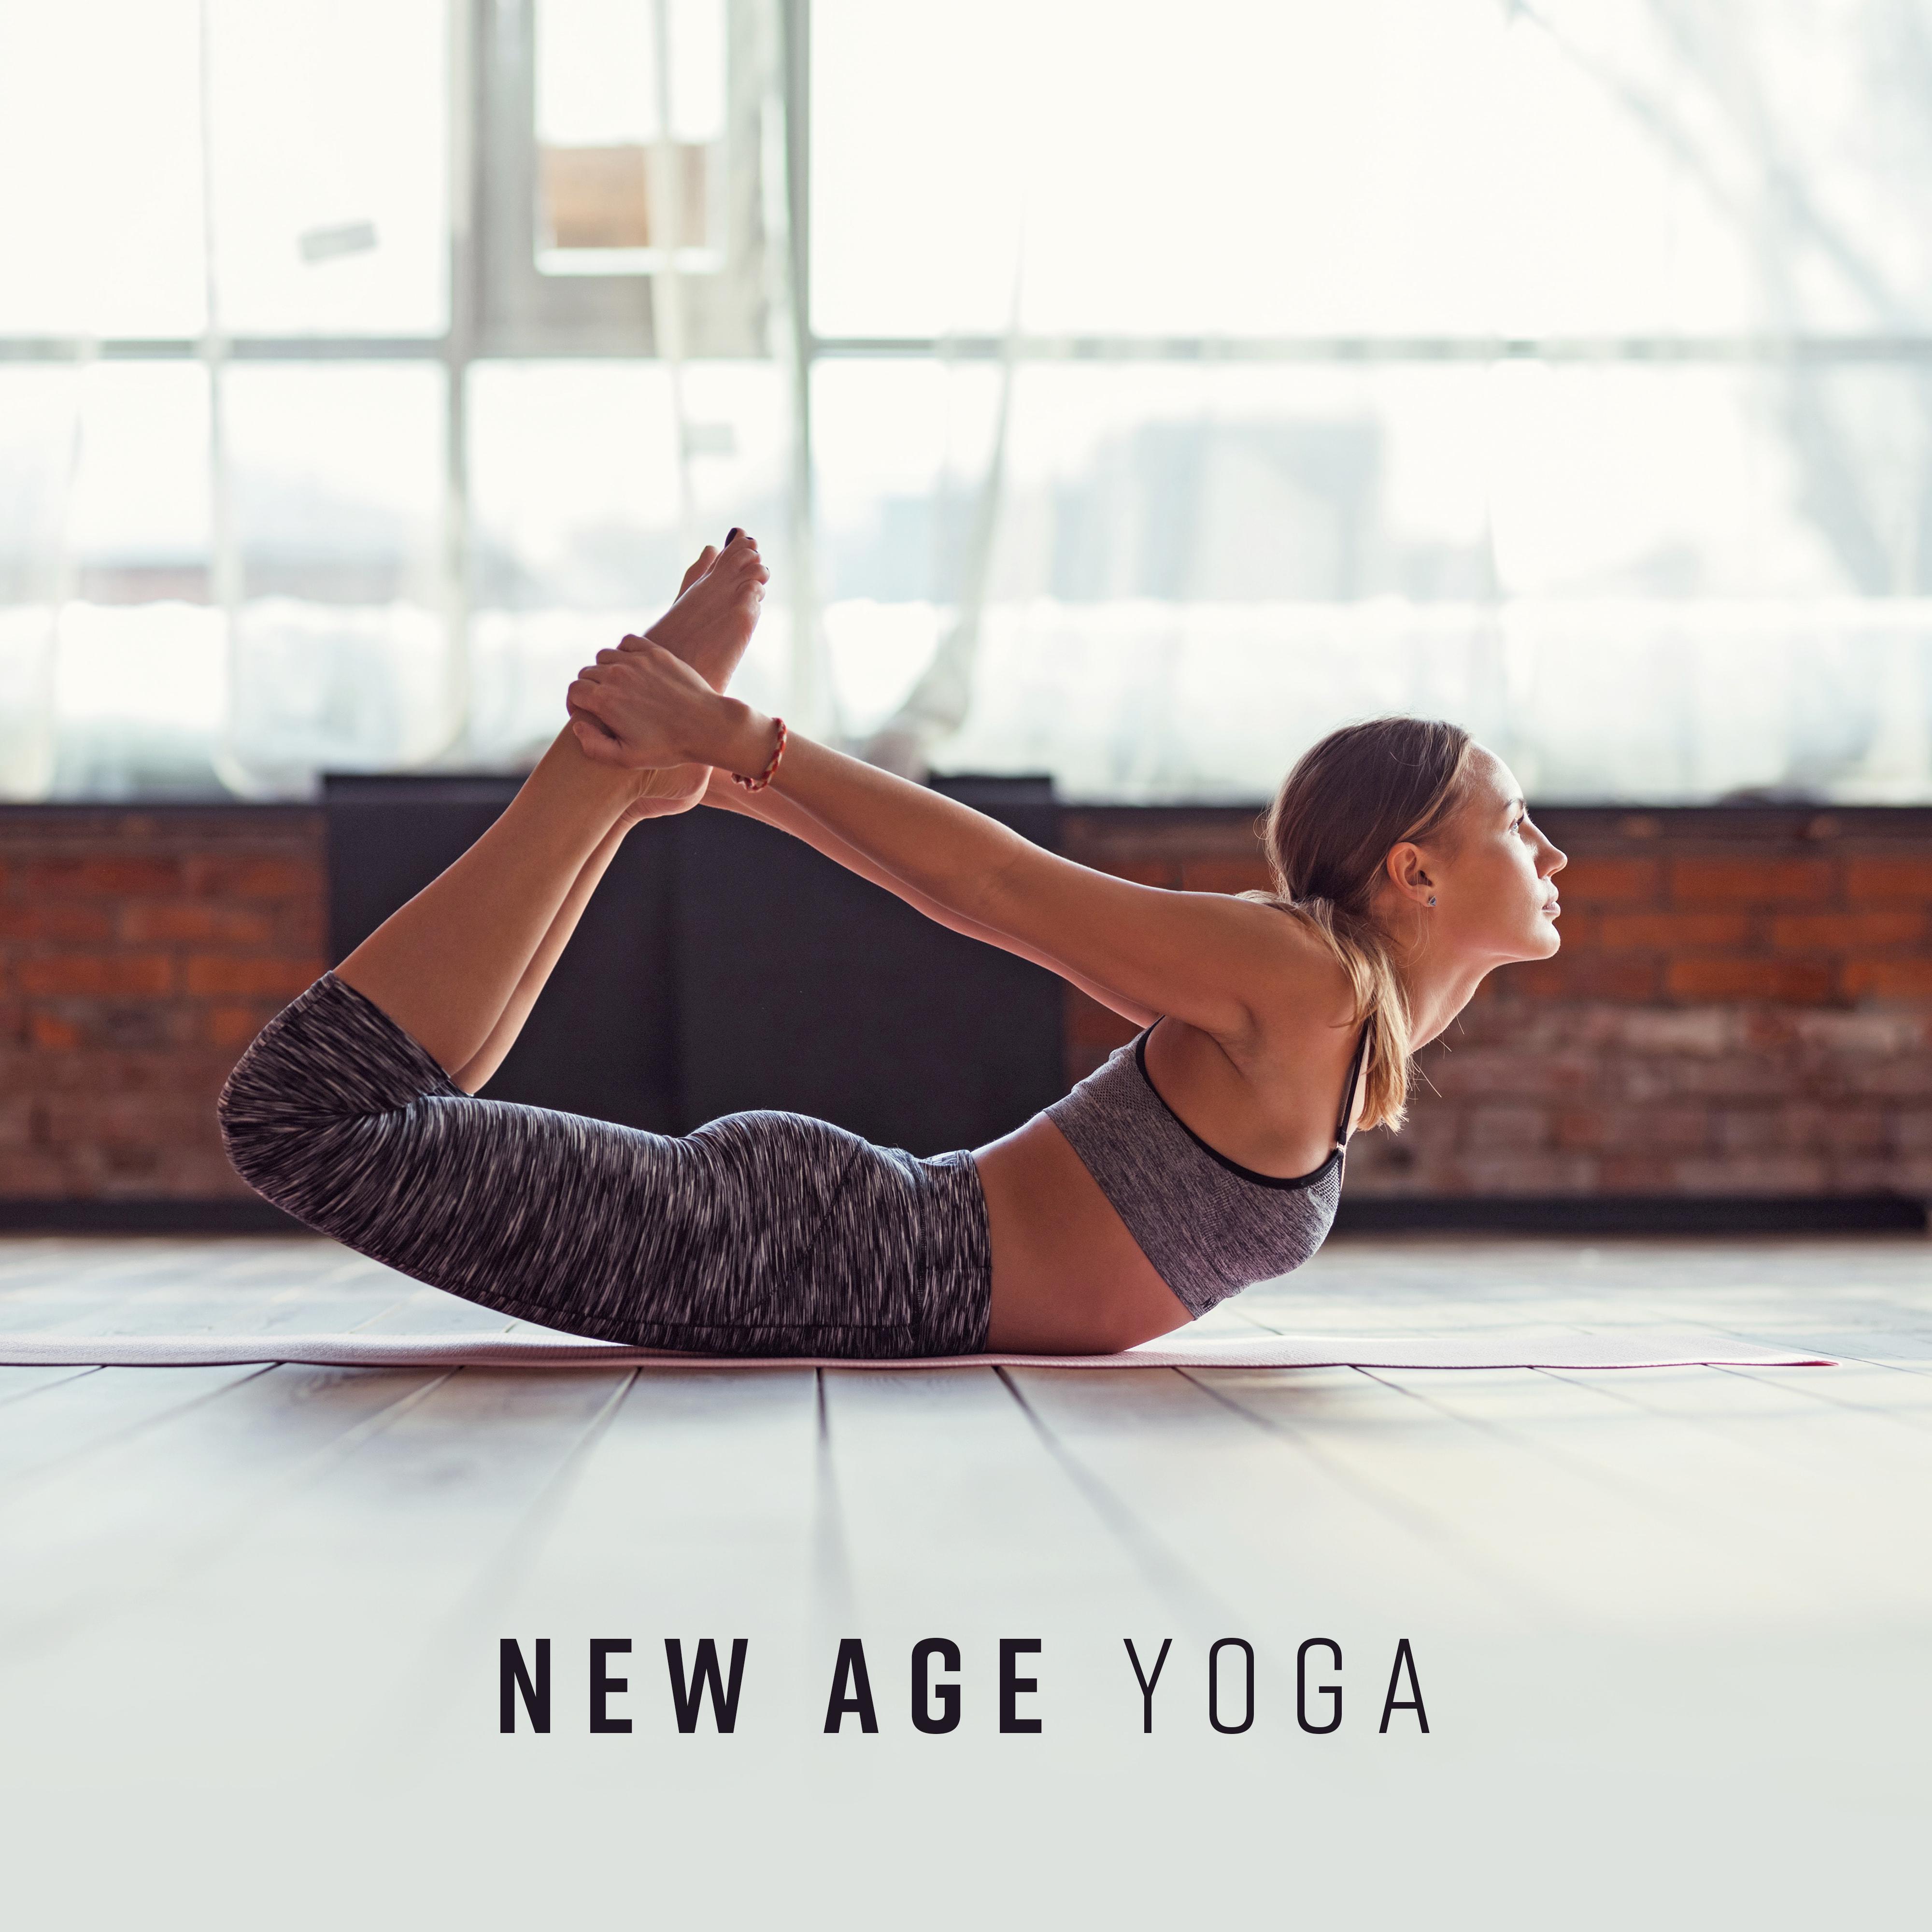 New Age Yoga